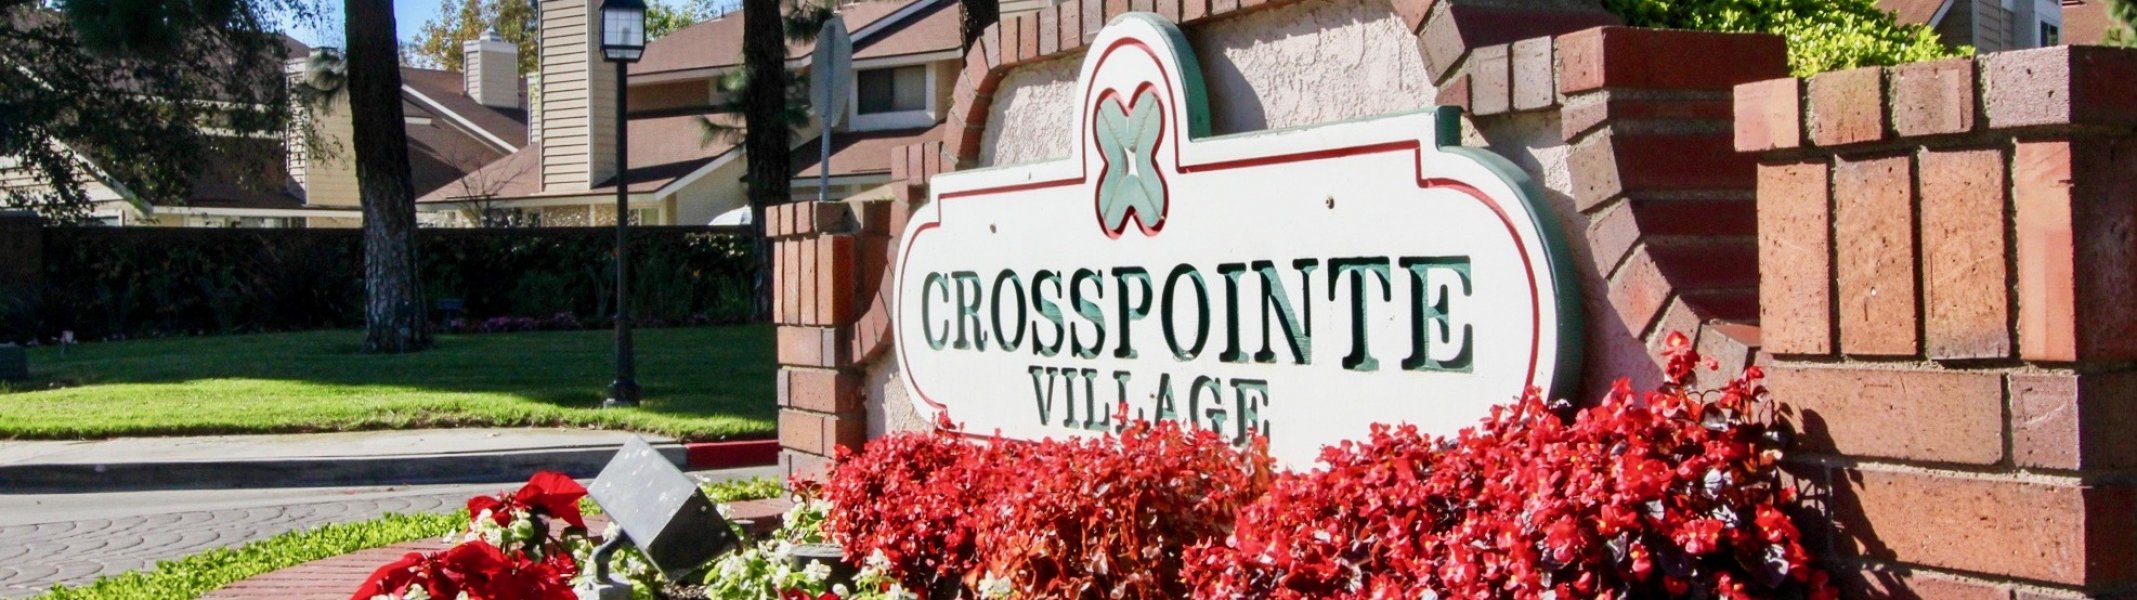 Crosspointe Village